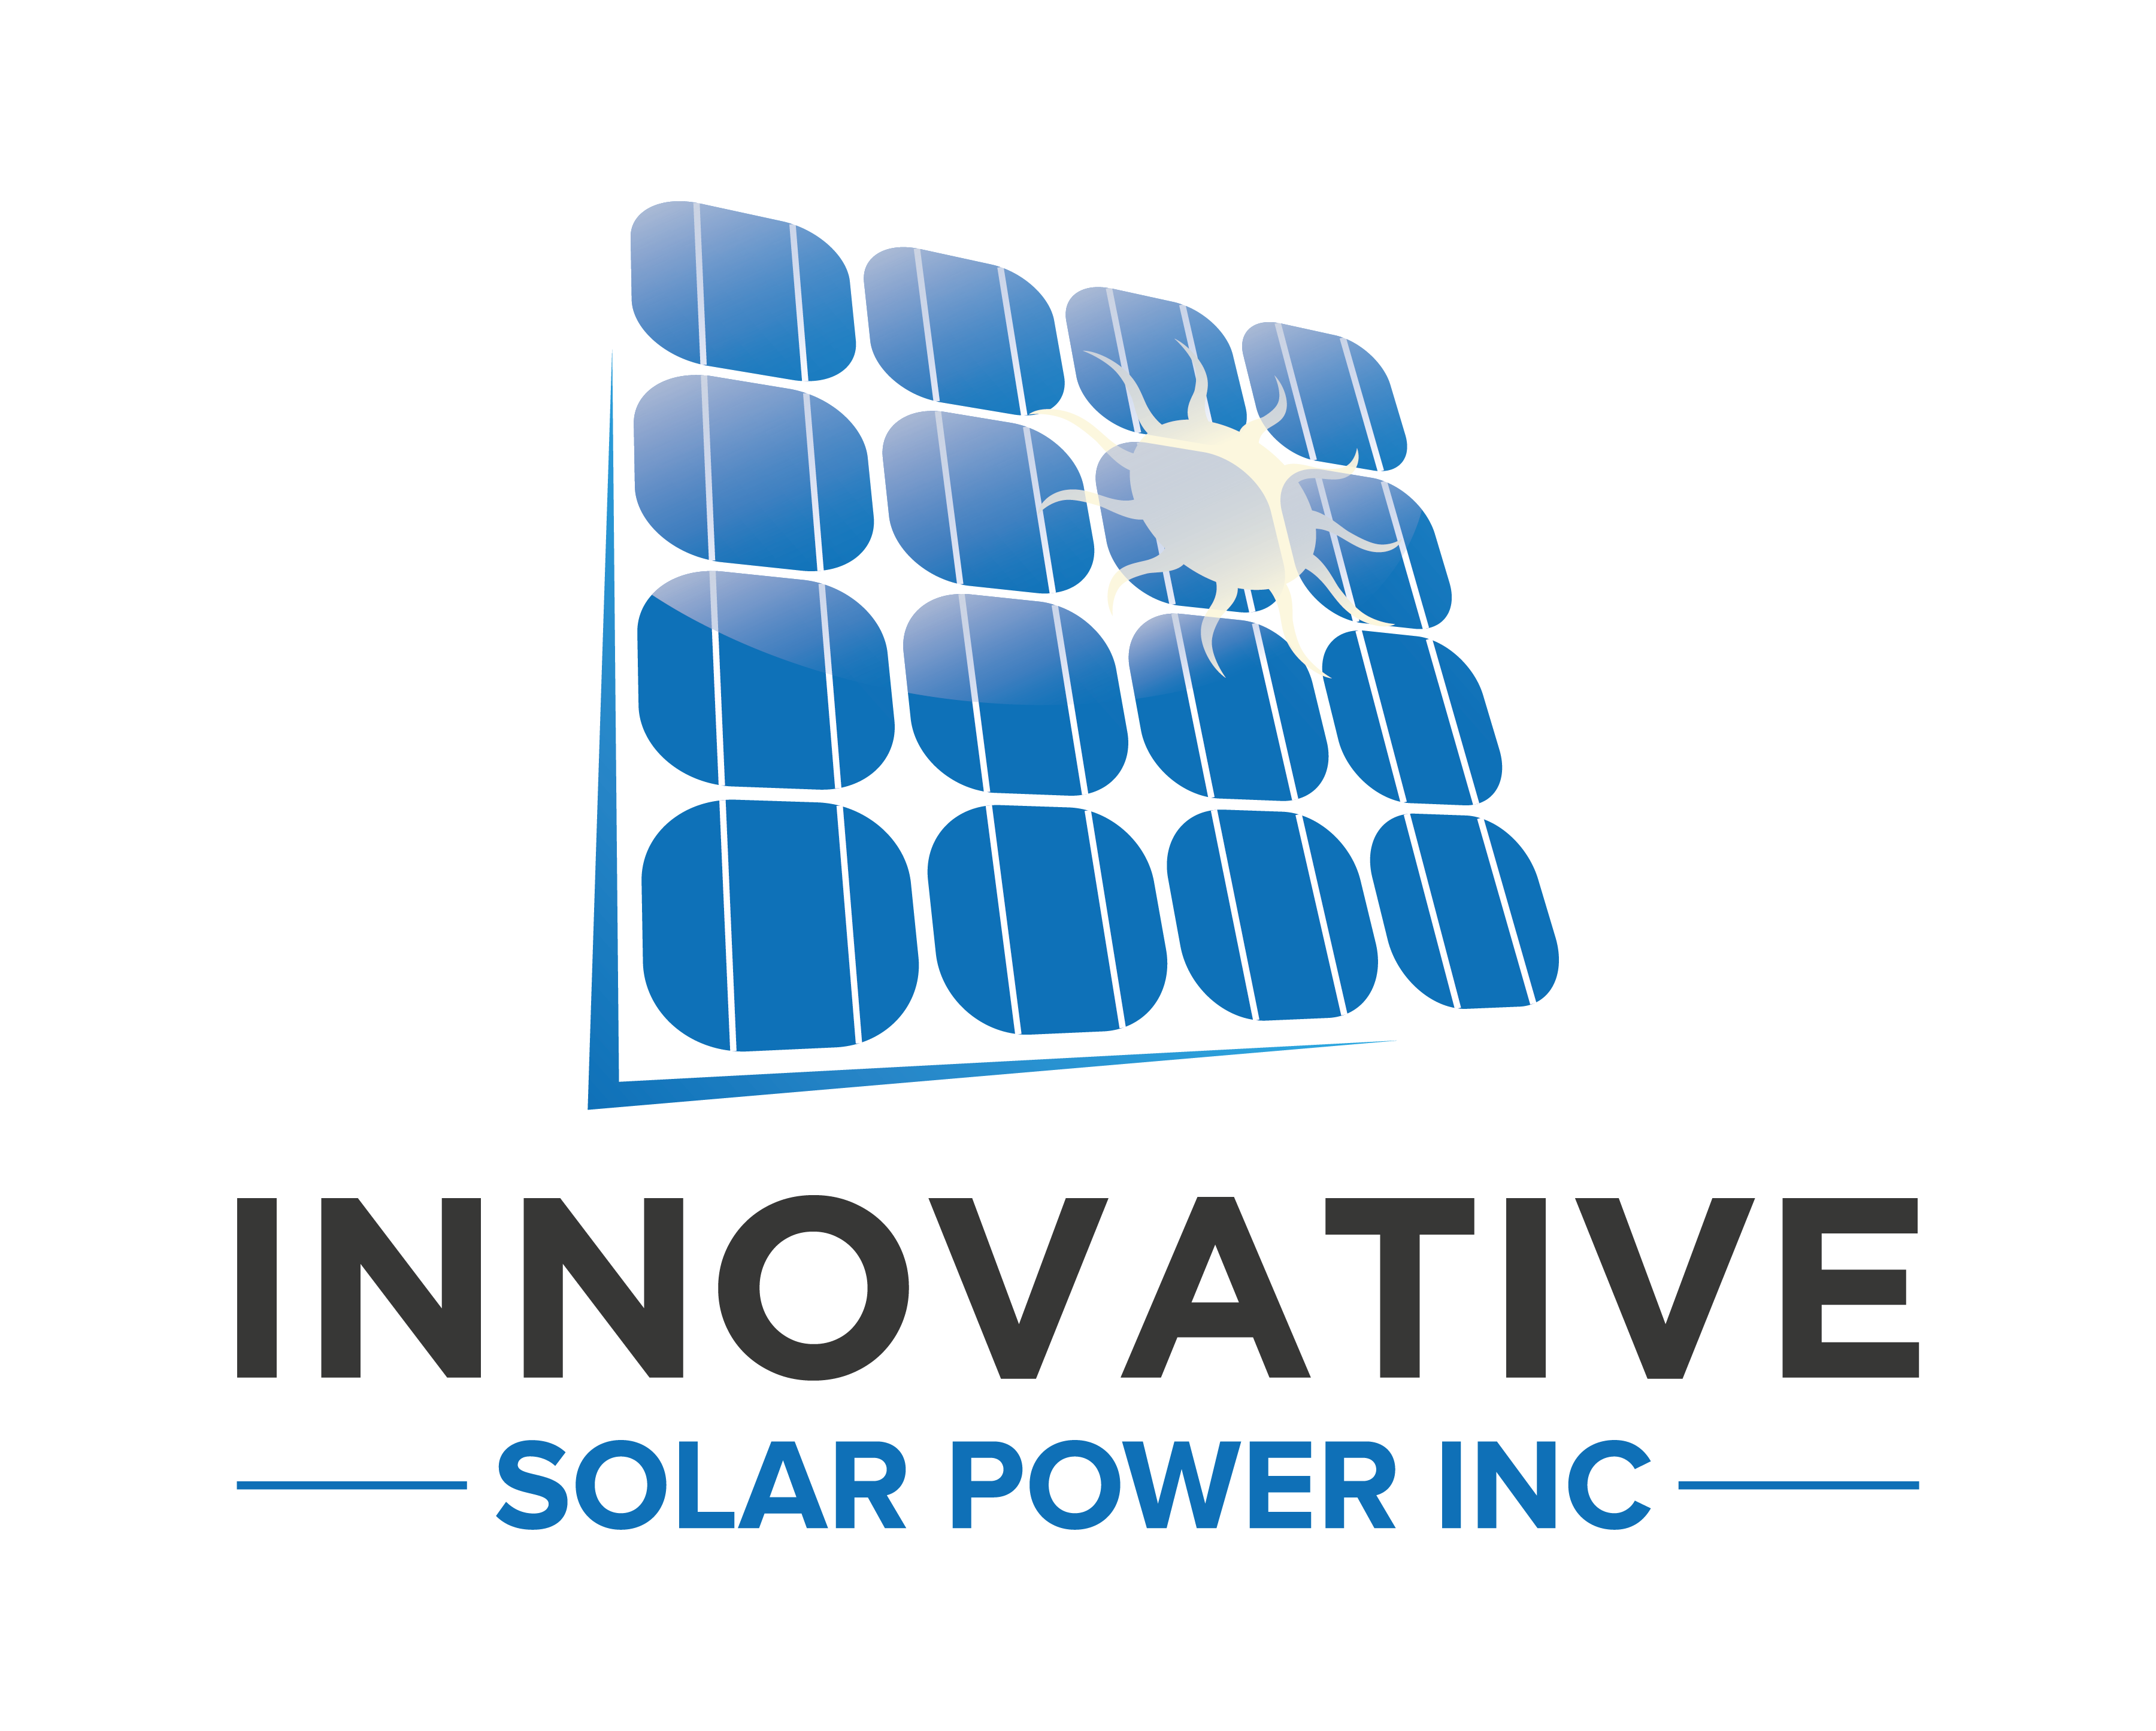 Innovative Solar Power Inc